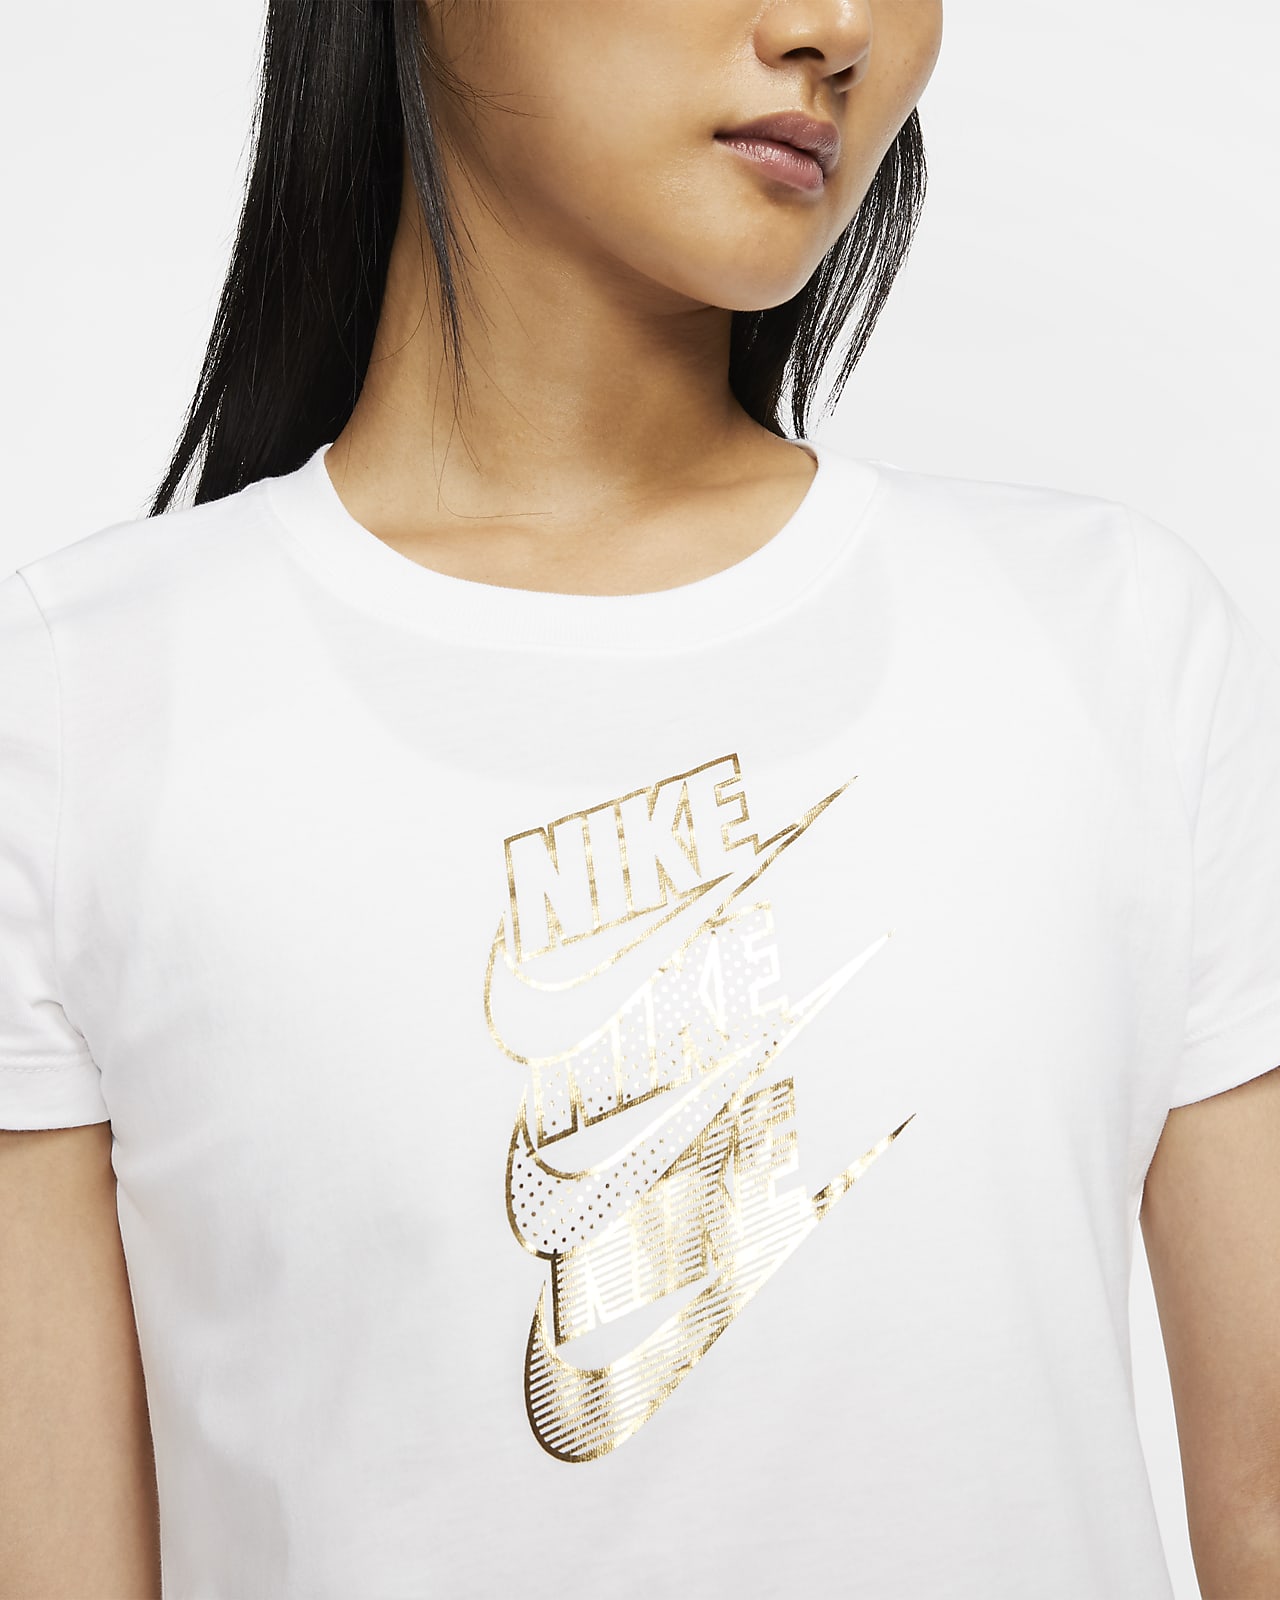 Buy > nike sportswear graphic t shirt > in stock